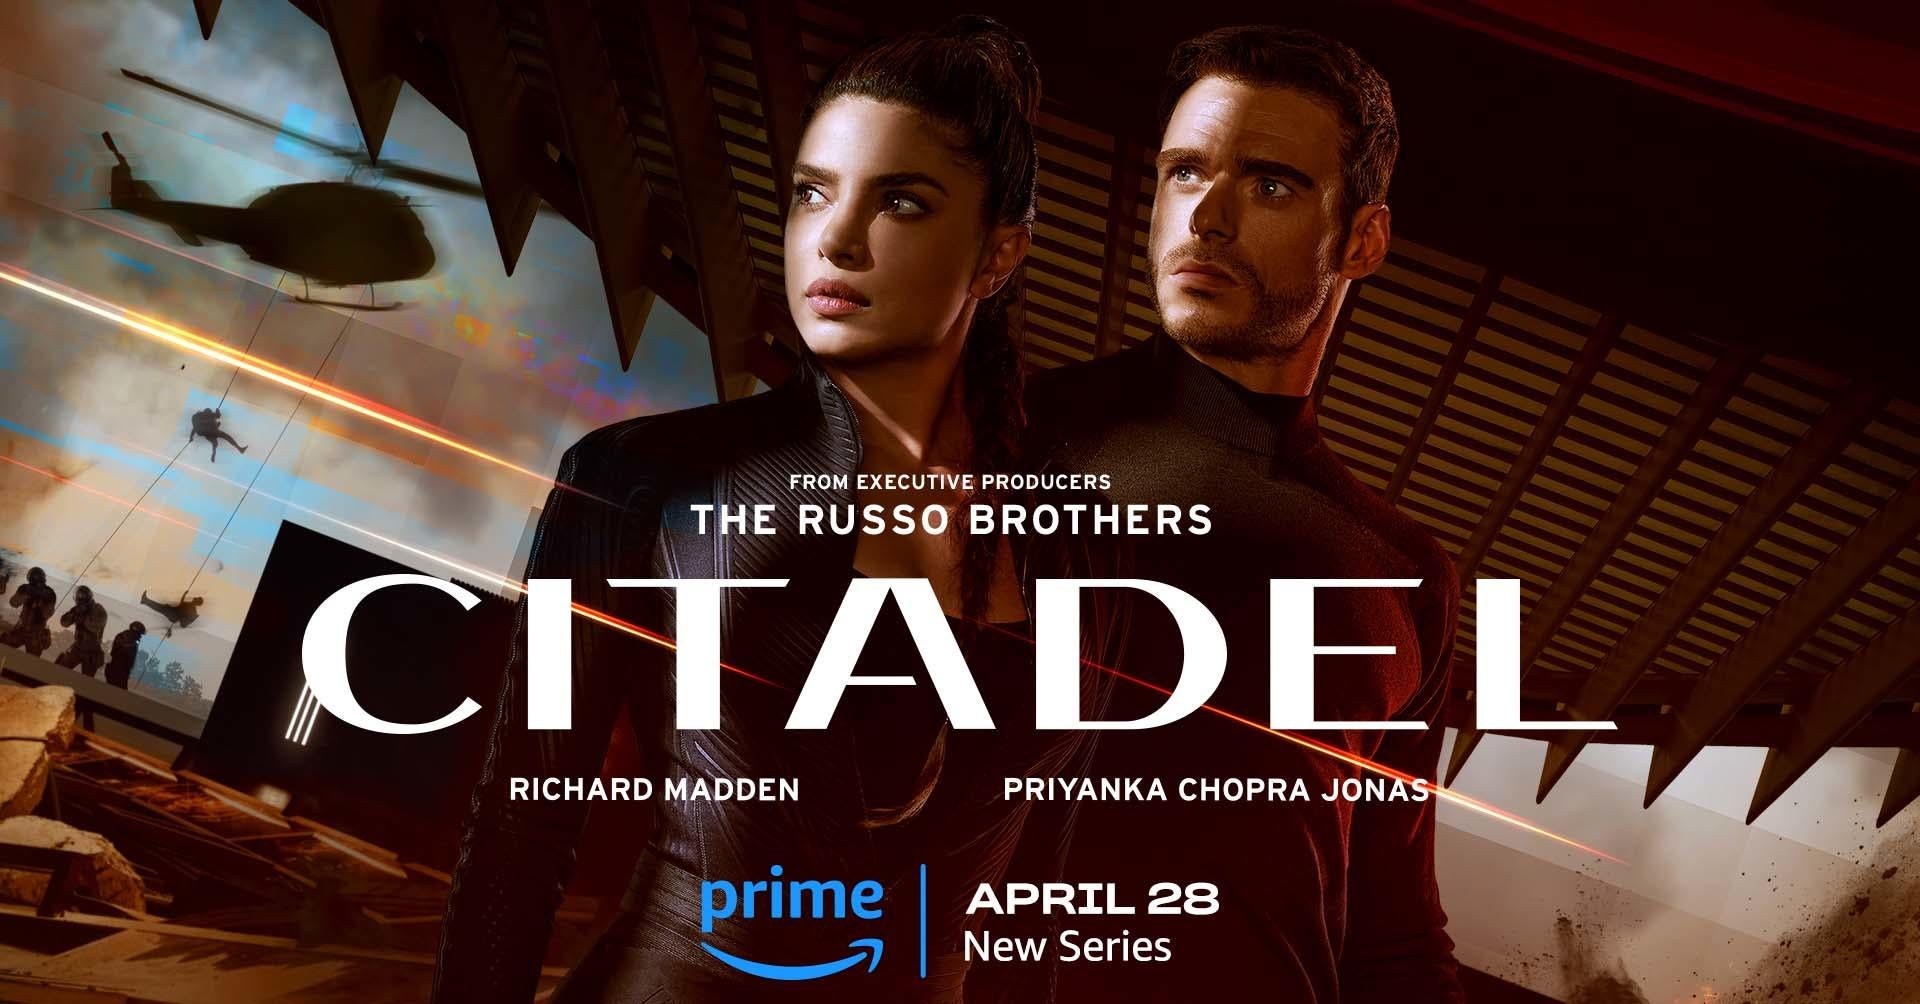 citadel-richard-madden-priyanka-chopra-jonas-prime-video-header